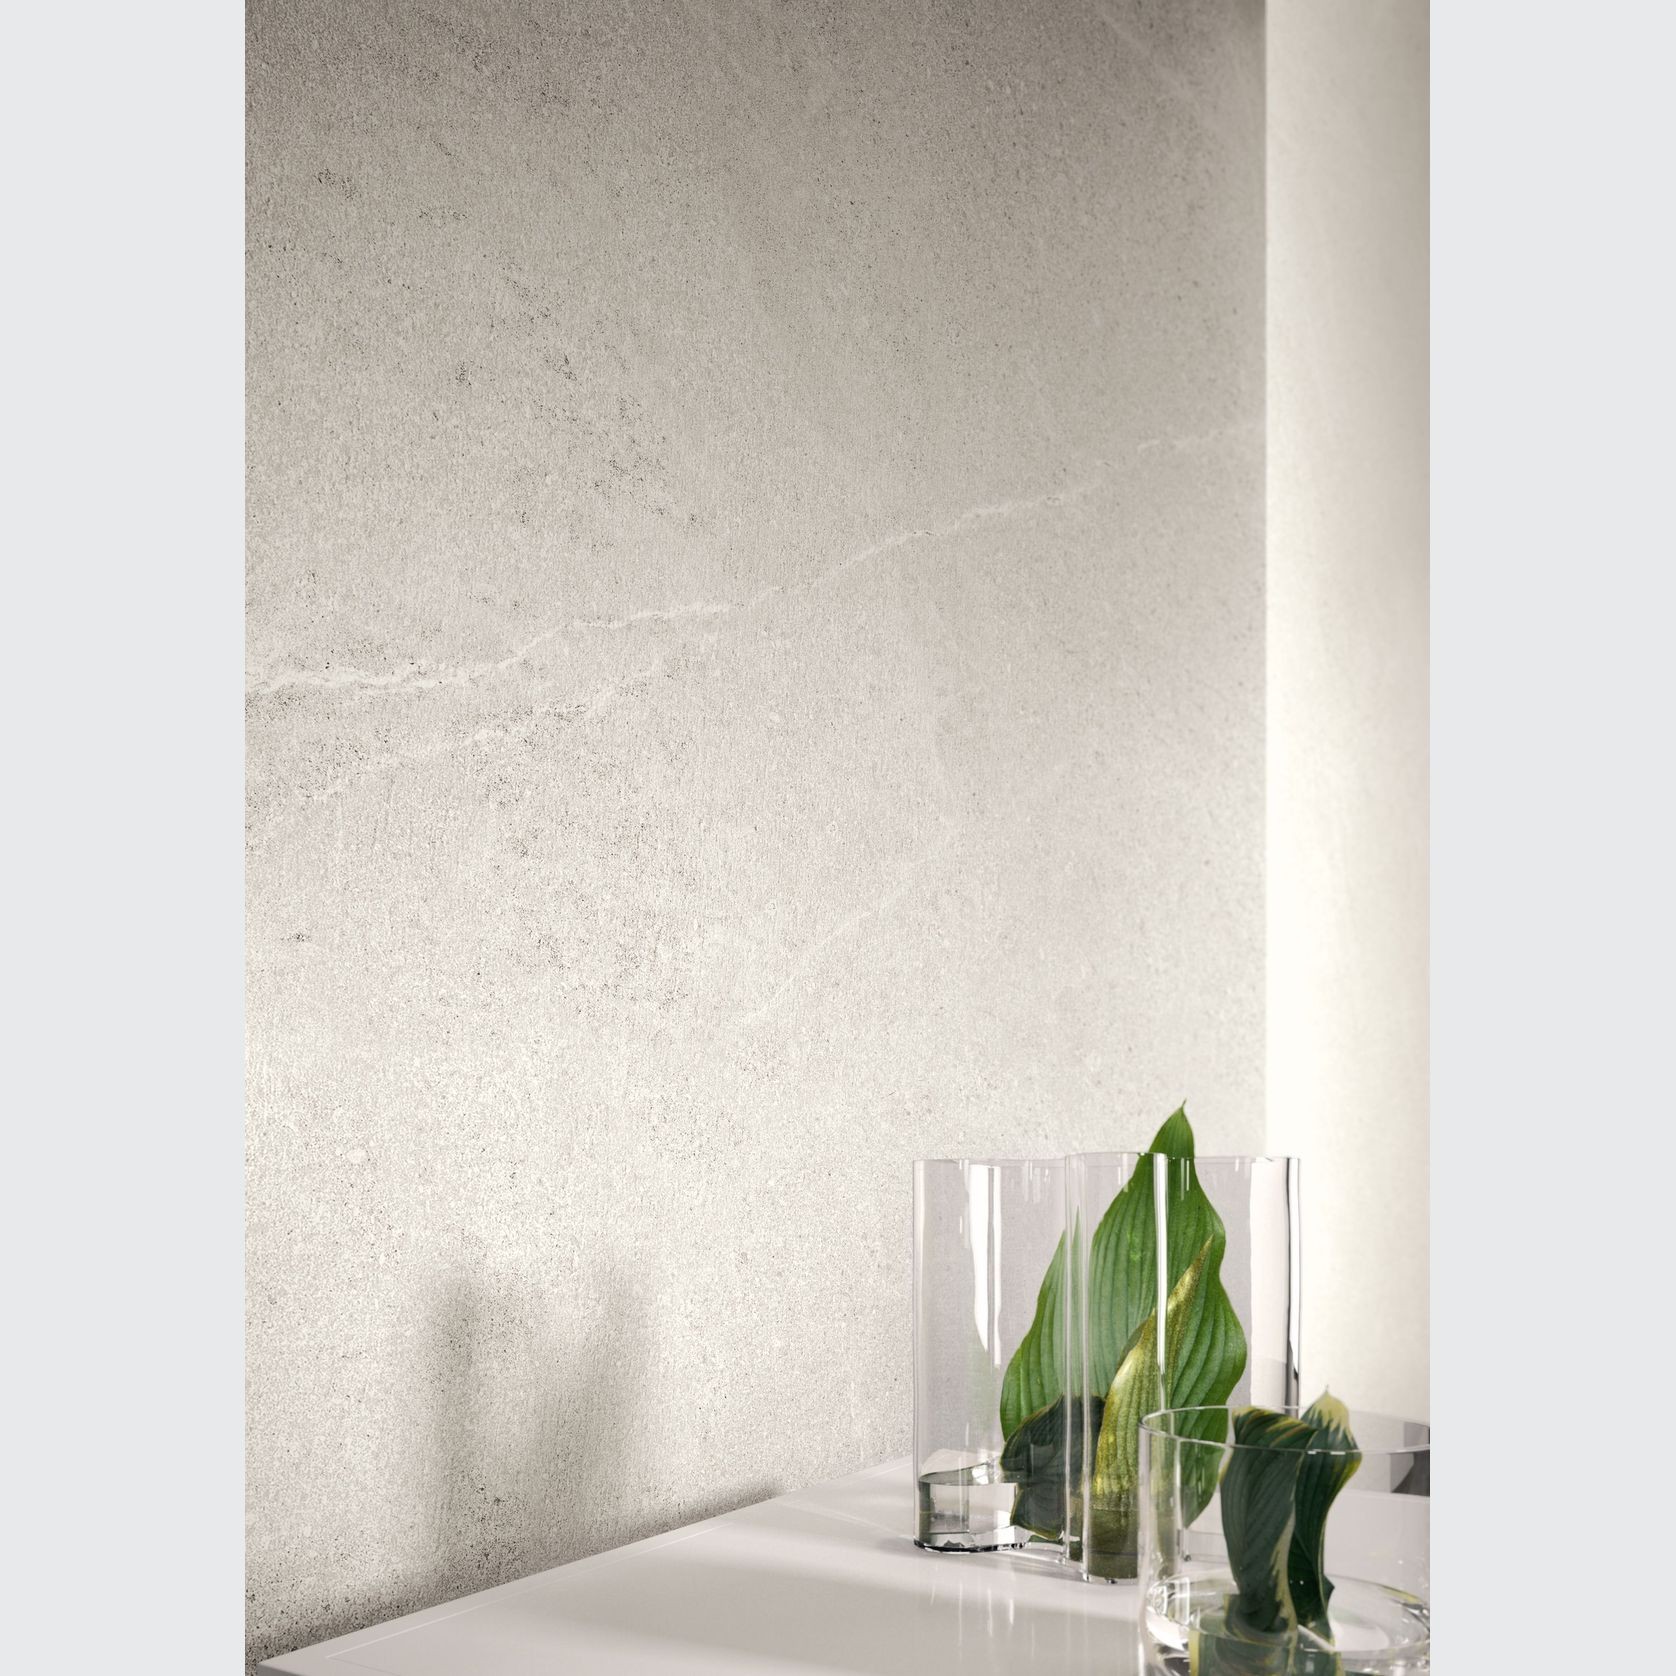 Limestone Kerlite Tile by Cotto d’Este | Clay gallery detail image